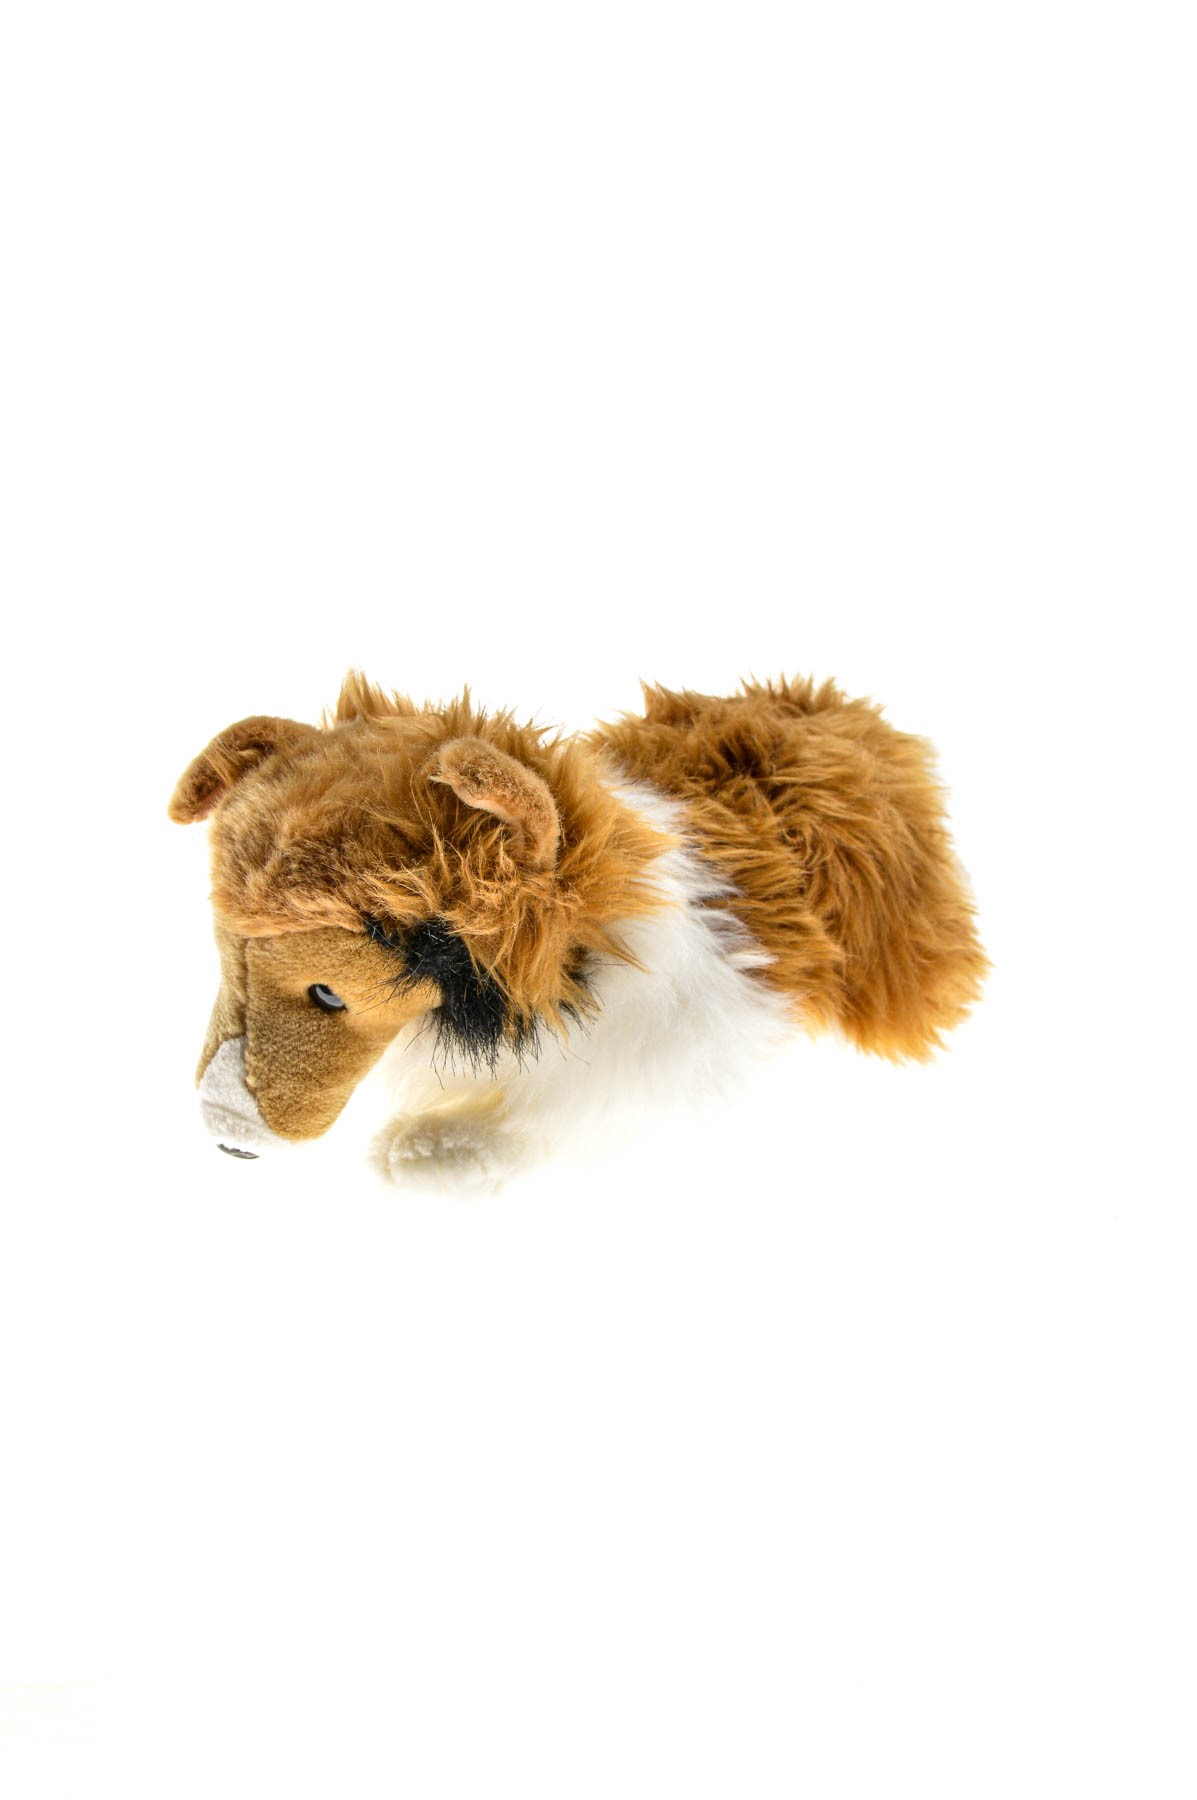 Stuffed toys - Dog - 1